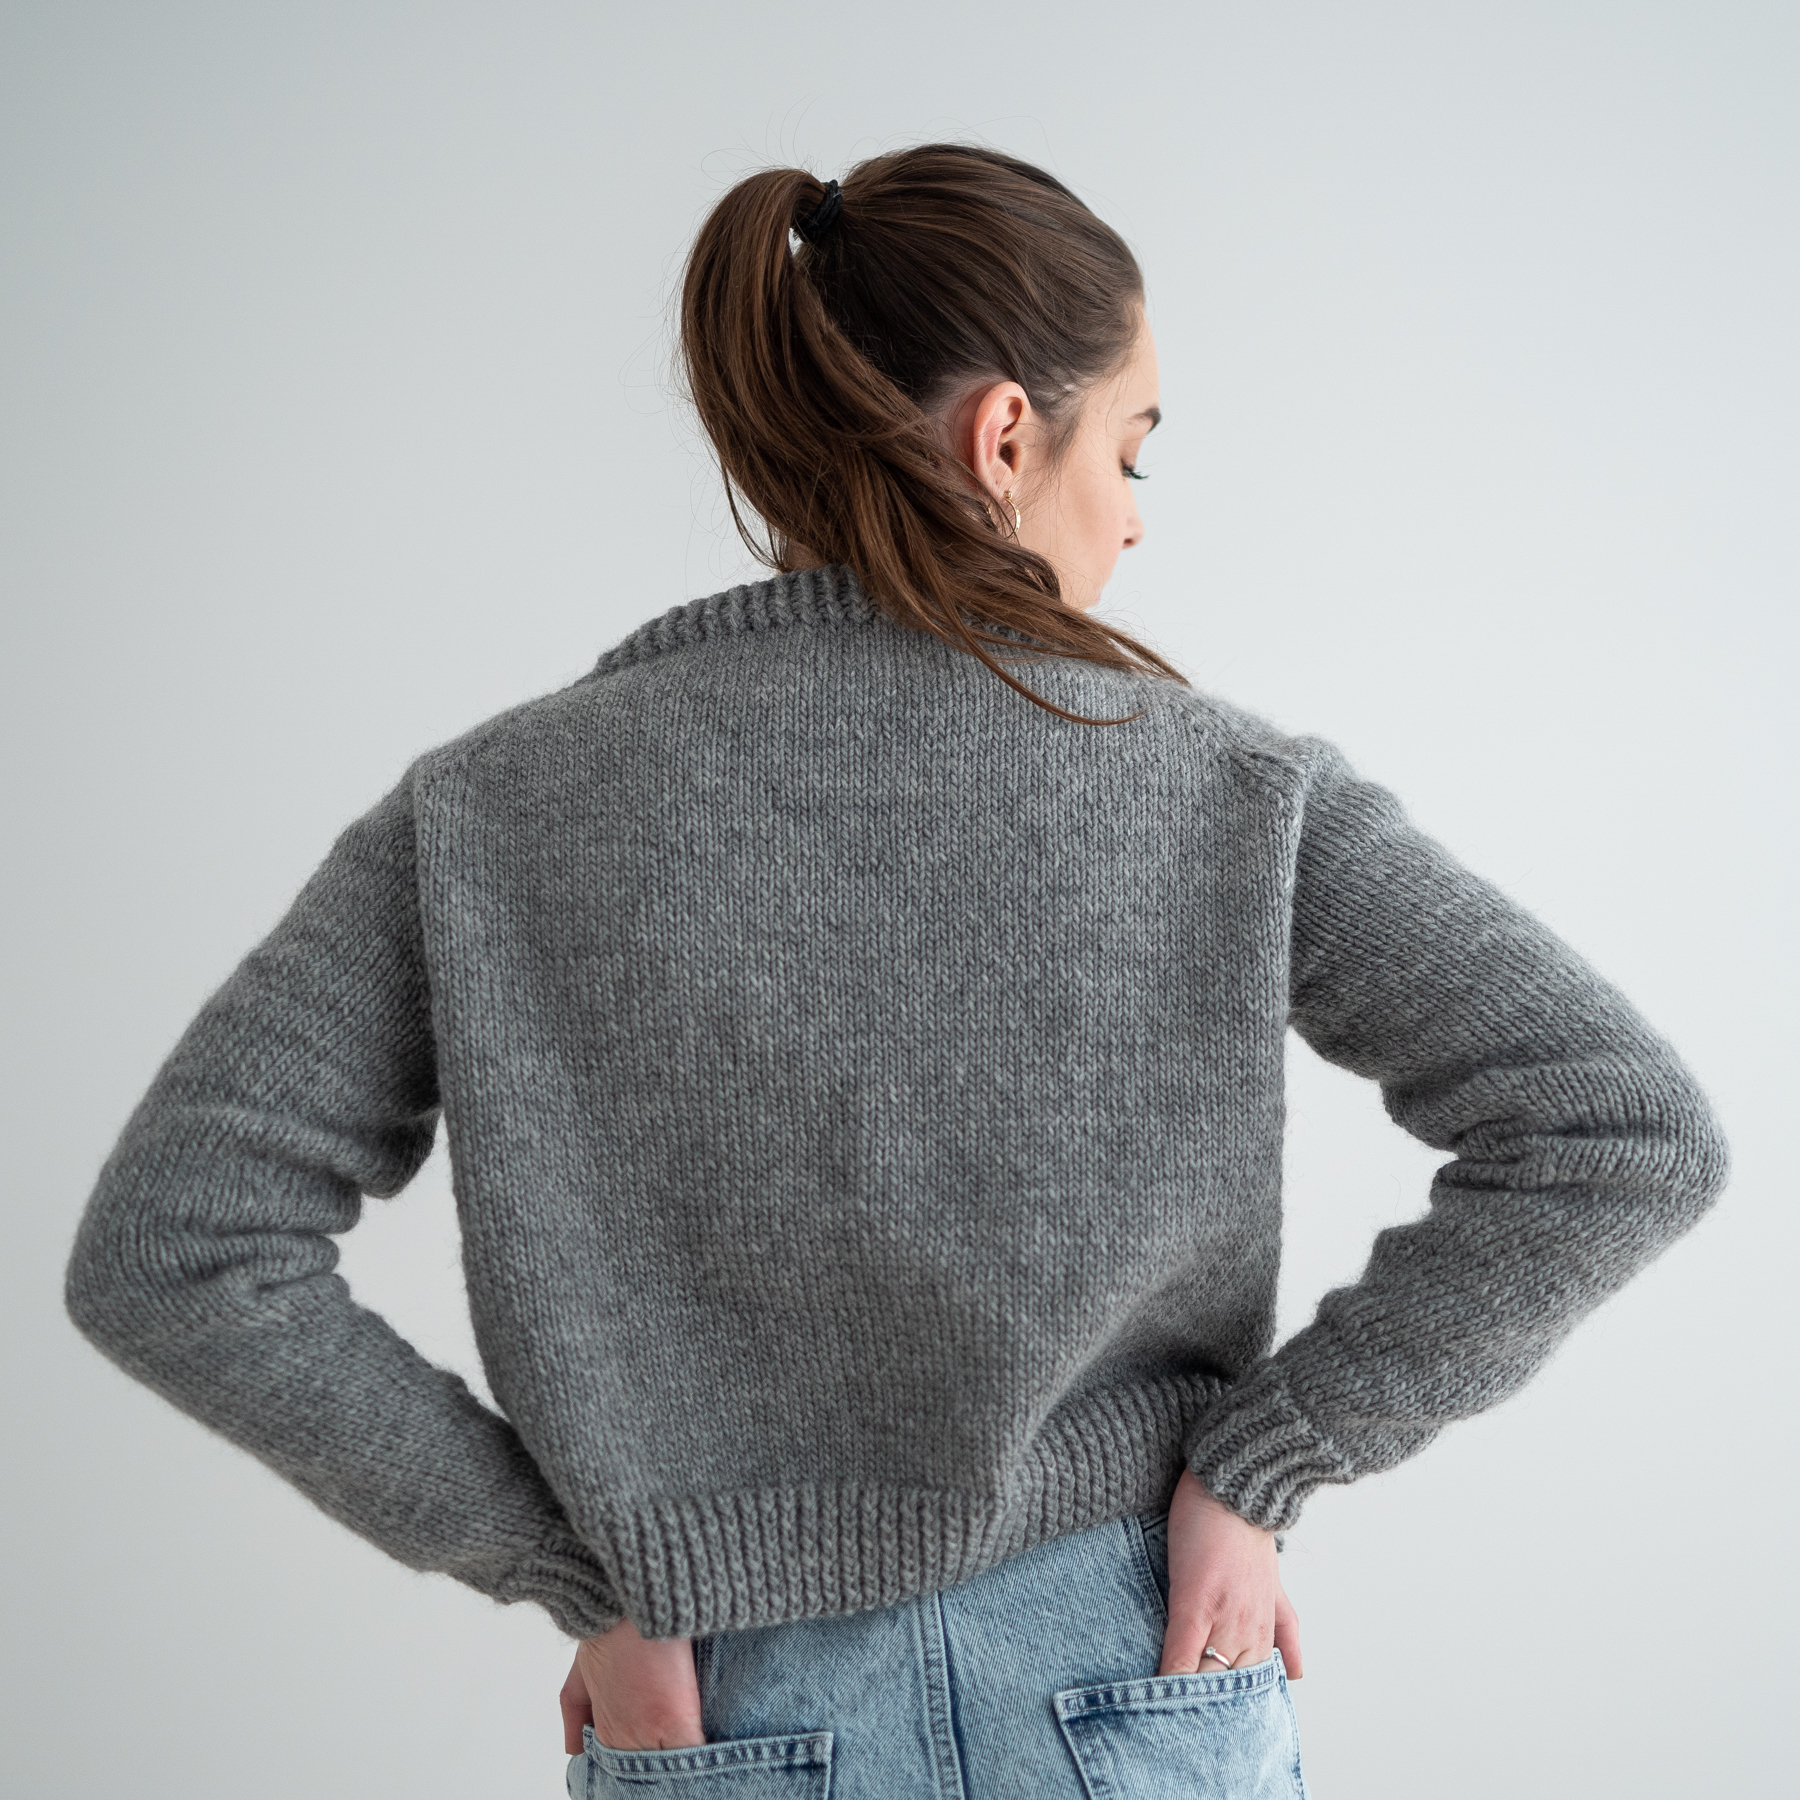  - Aha sweater | Cool sweater women knitting kit - by HipKnitShop - 16/11/2019